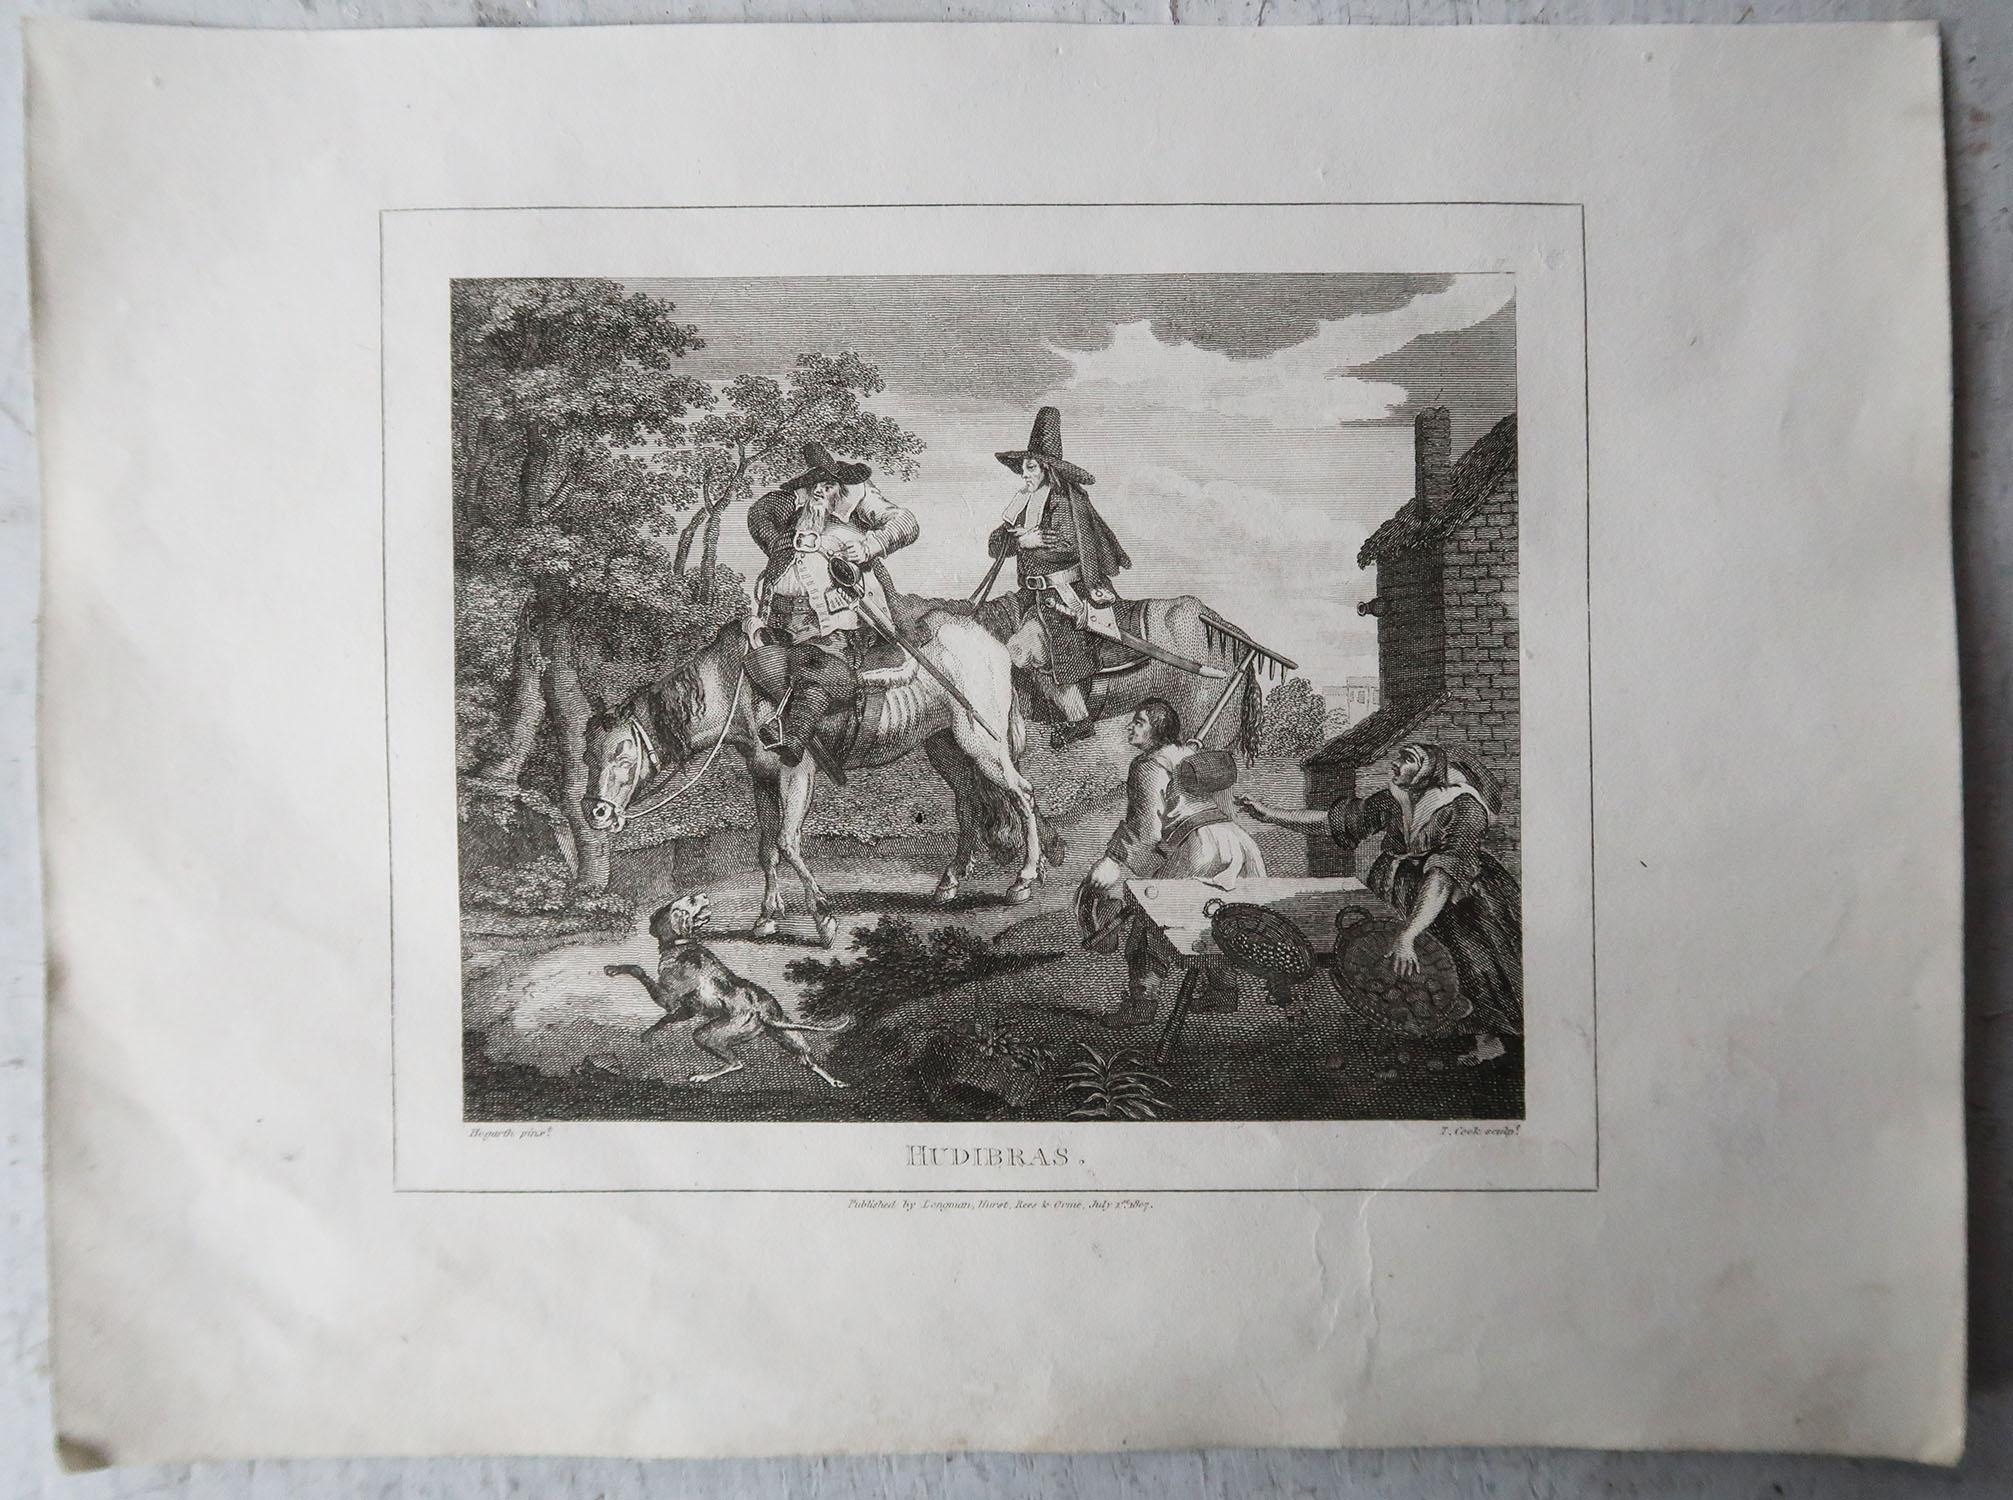 Set of 10 Original Antique Prints After William Hogarth, 